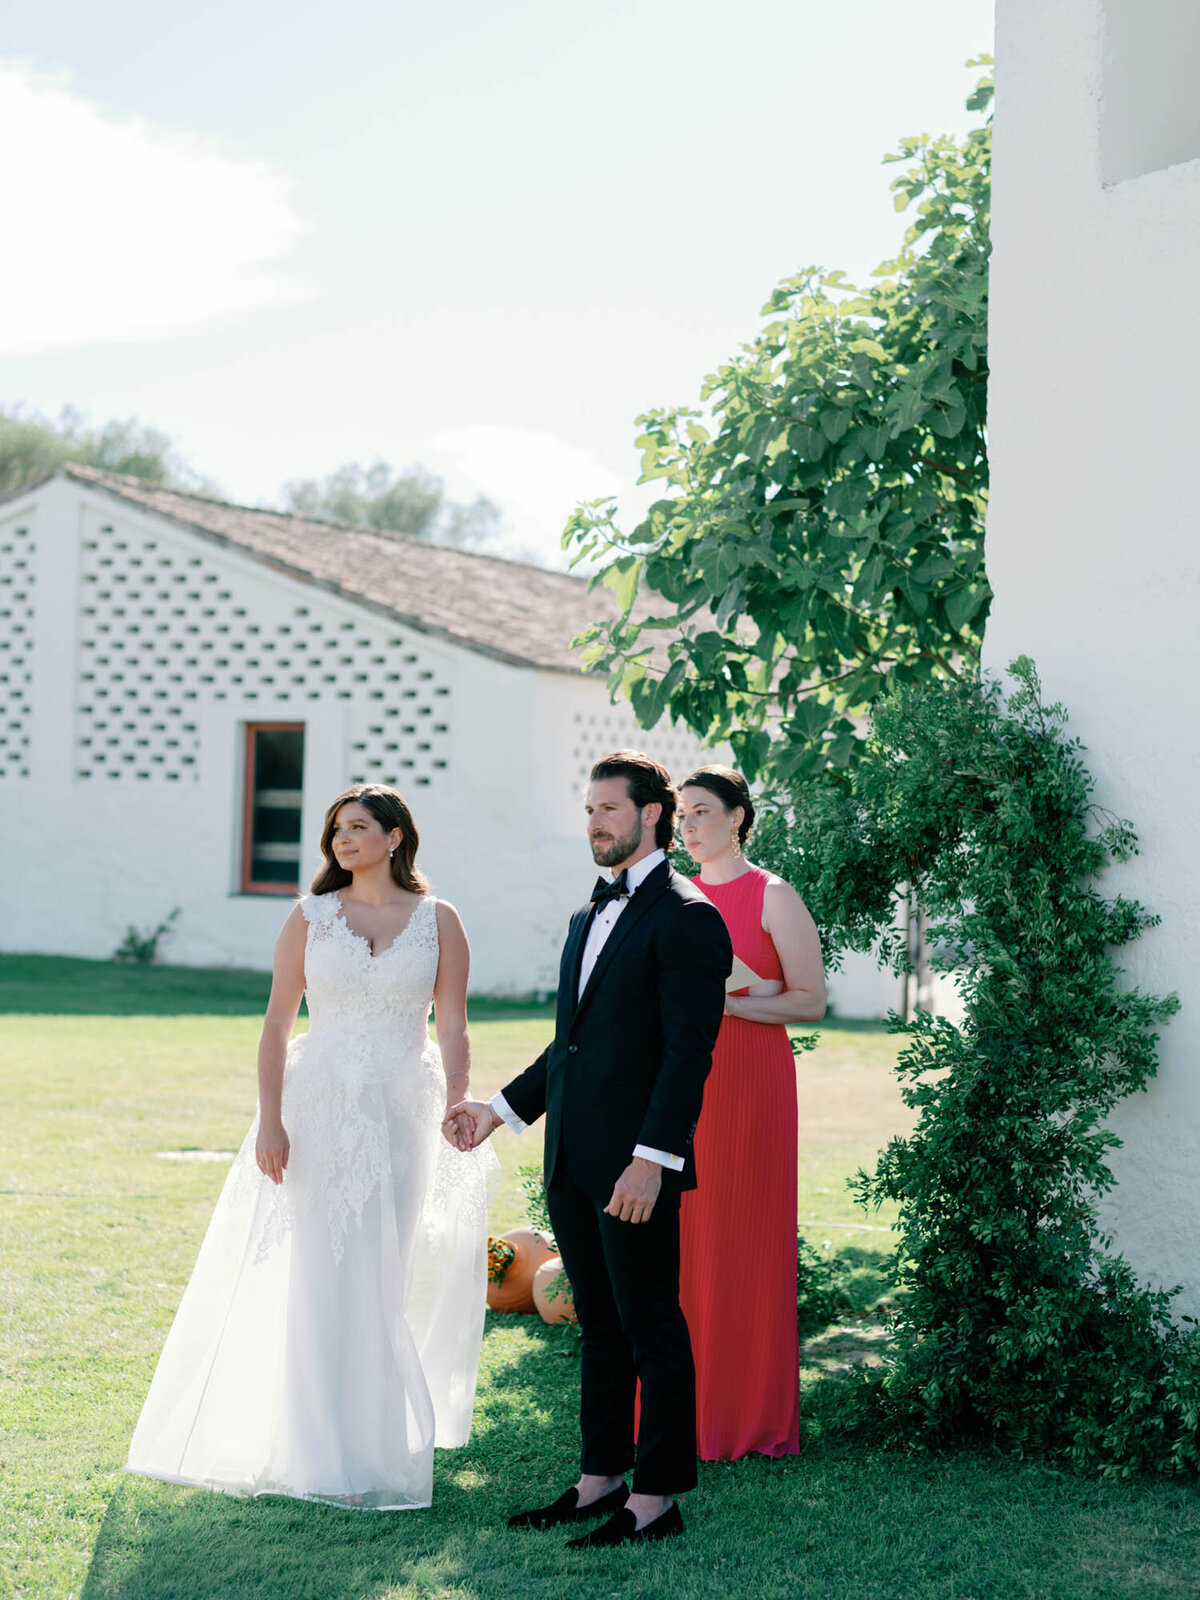 Evoke_Destination Wedding_Portugal_Branco Prata43